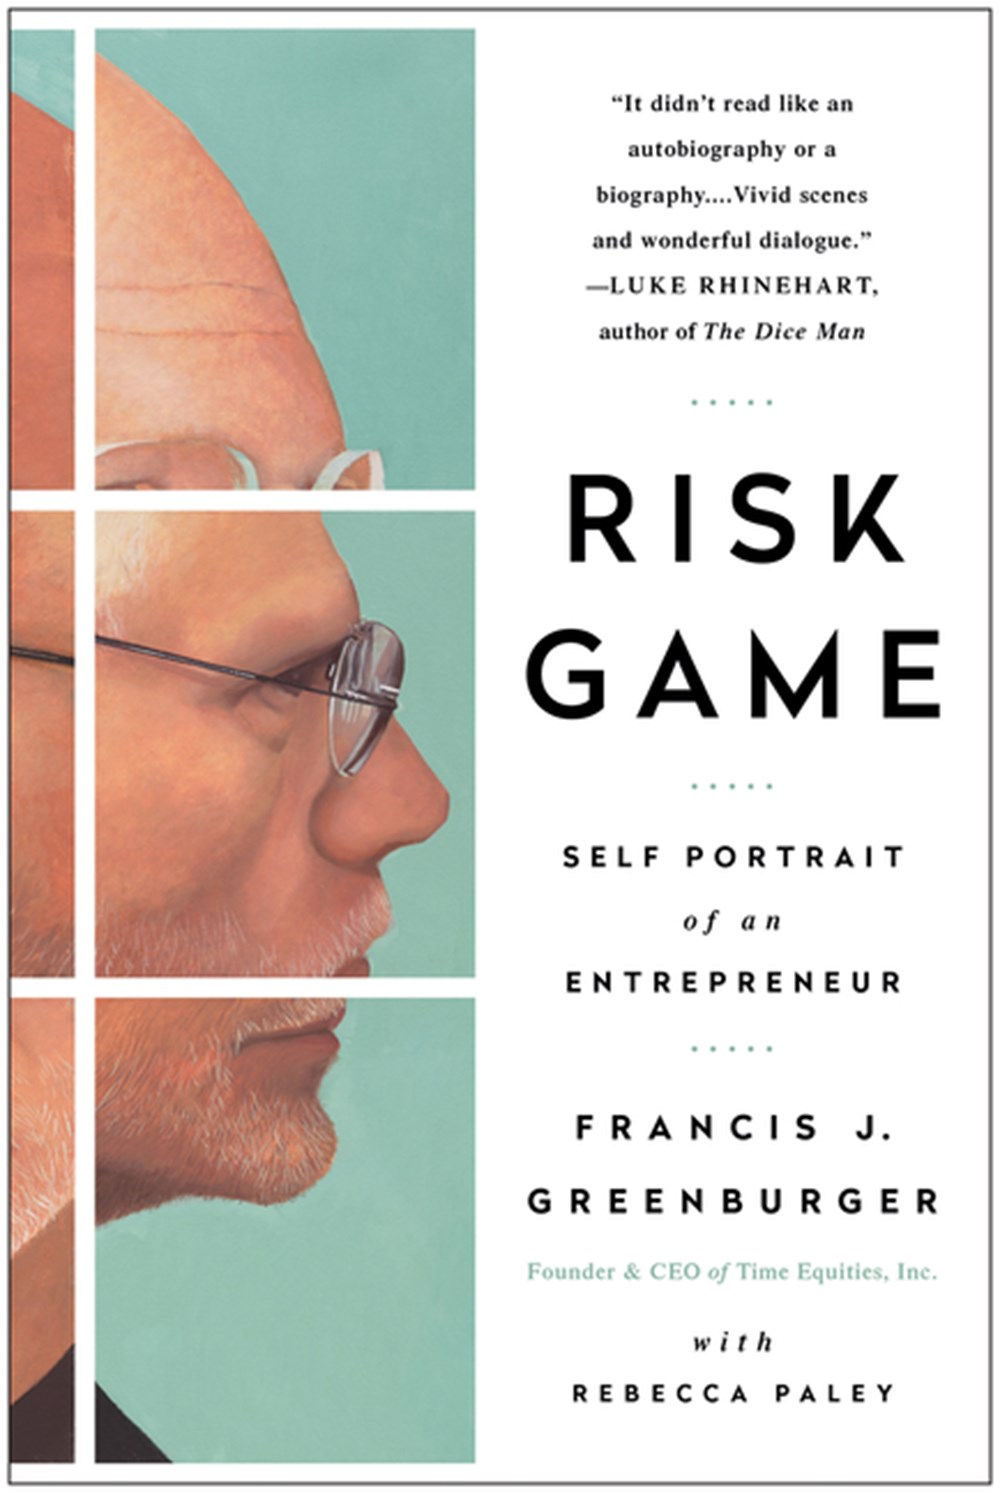 Risk Game Self Portrait of an Entrepreneur